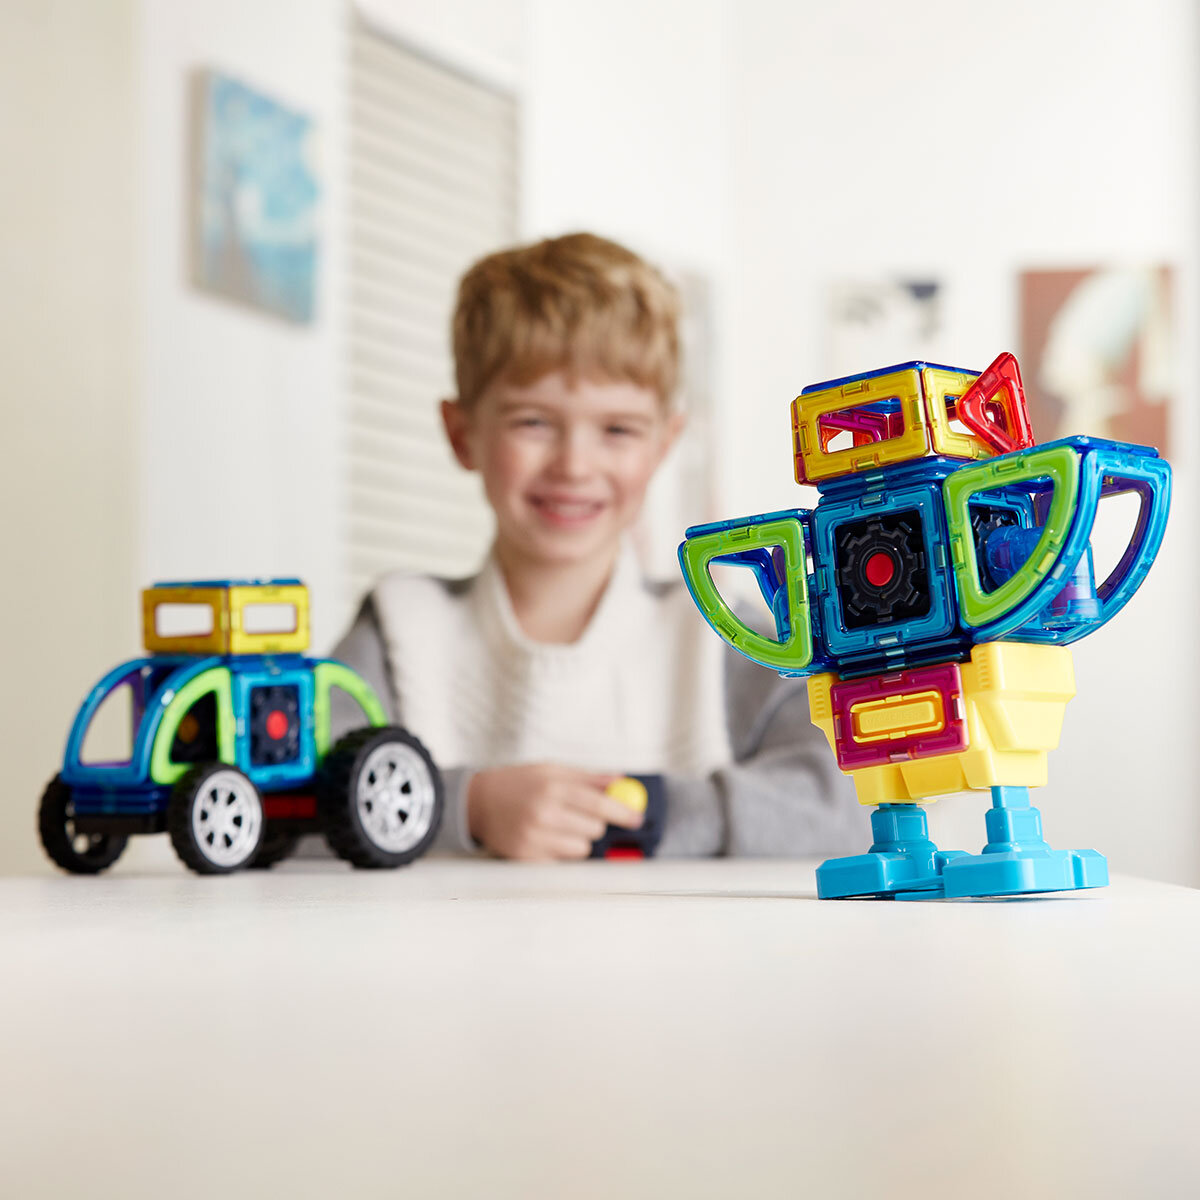 Buy Magformers Walking Robot Car Set Lifestyle Image at Costco.co.uk